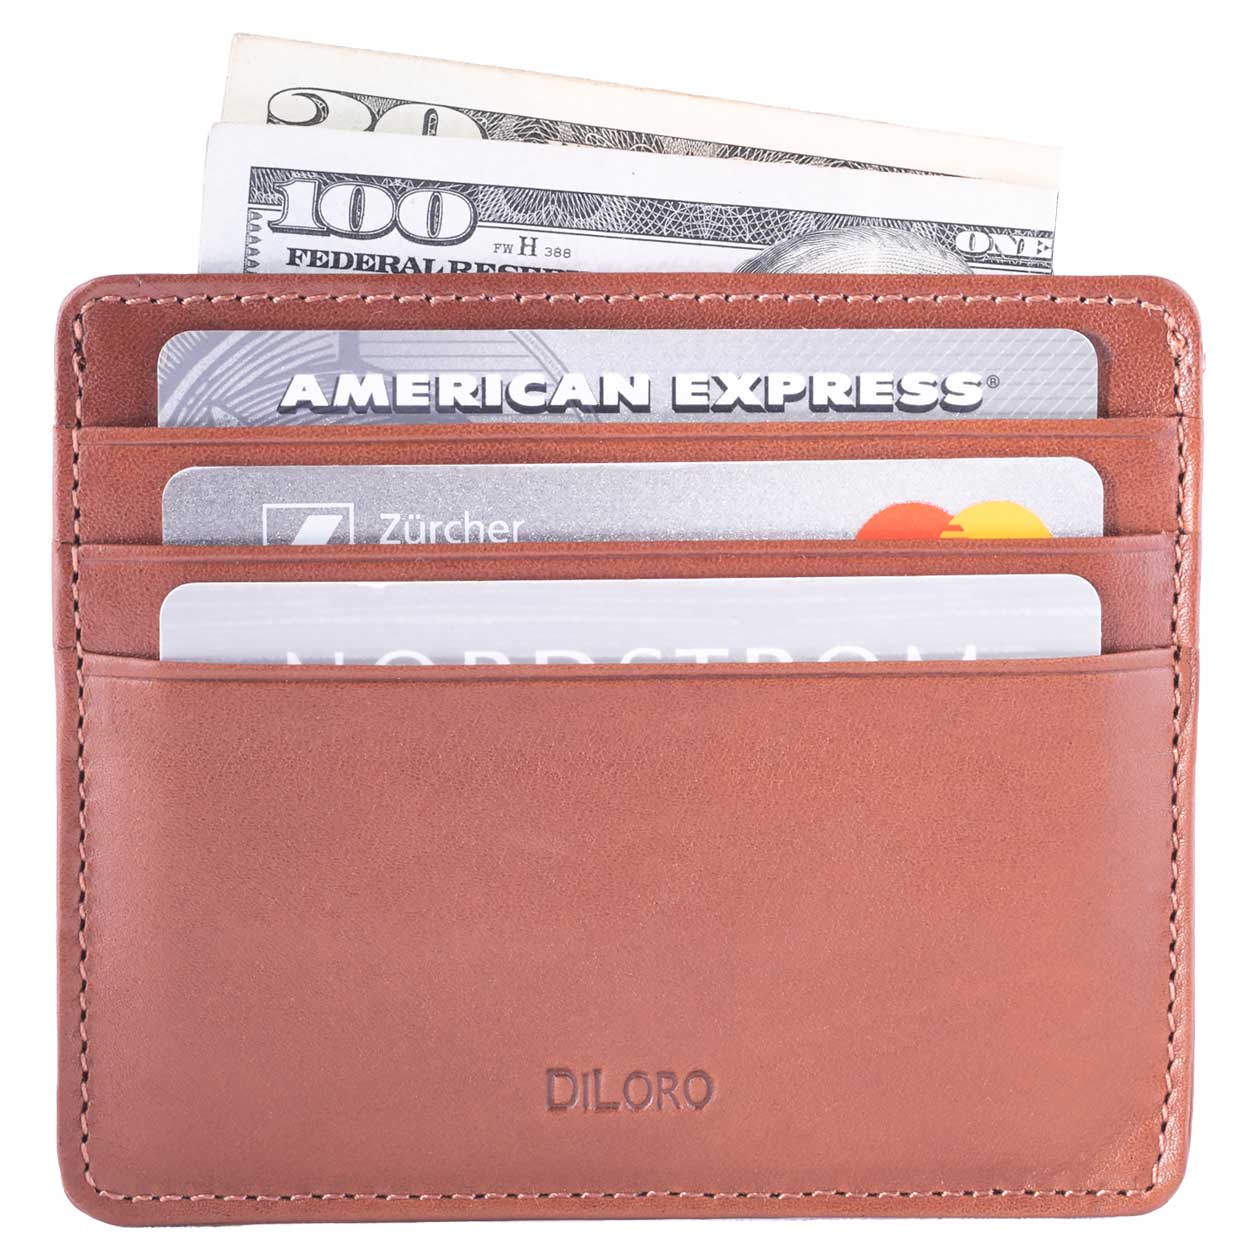 Minimalist Mini Slim Wallet, Solid Color Credit Card Holder